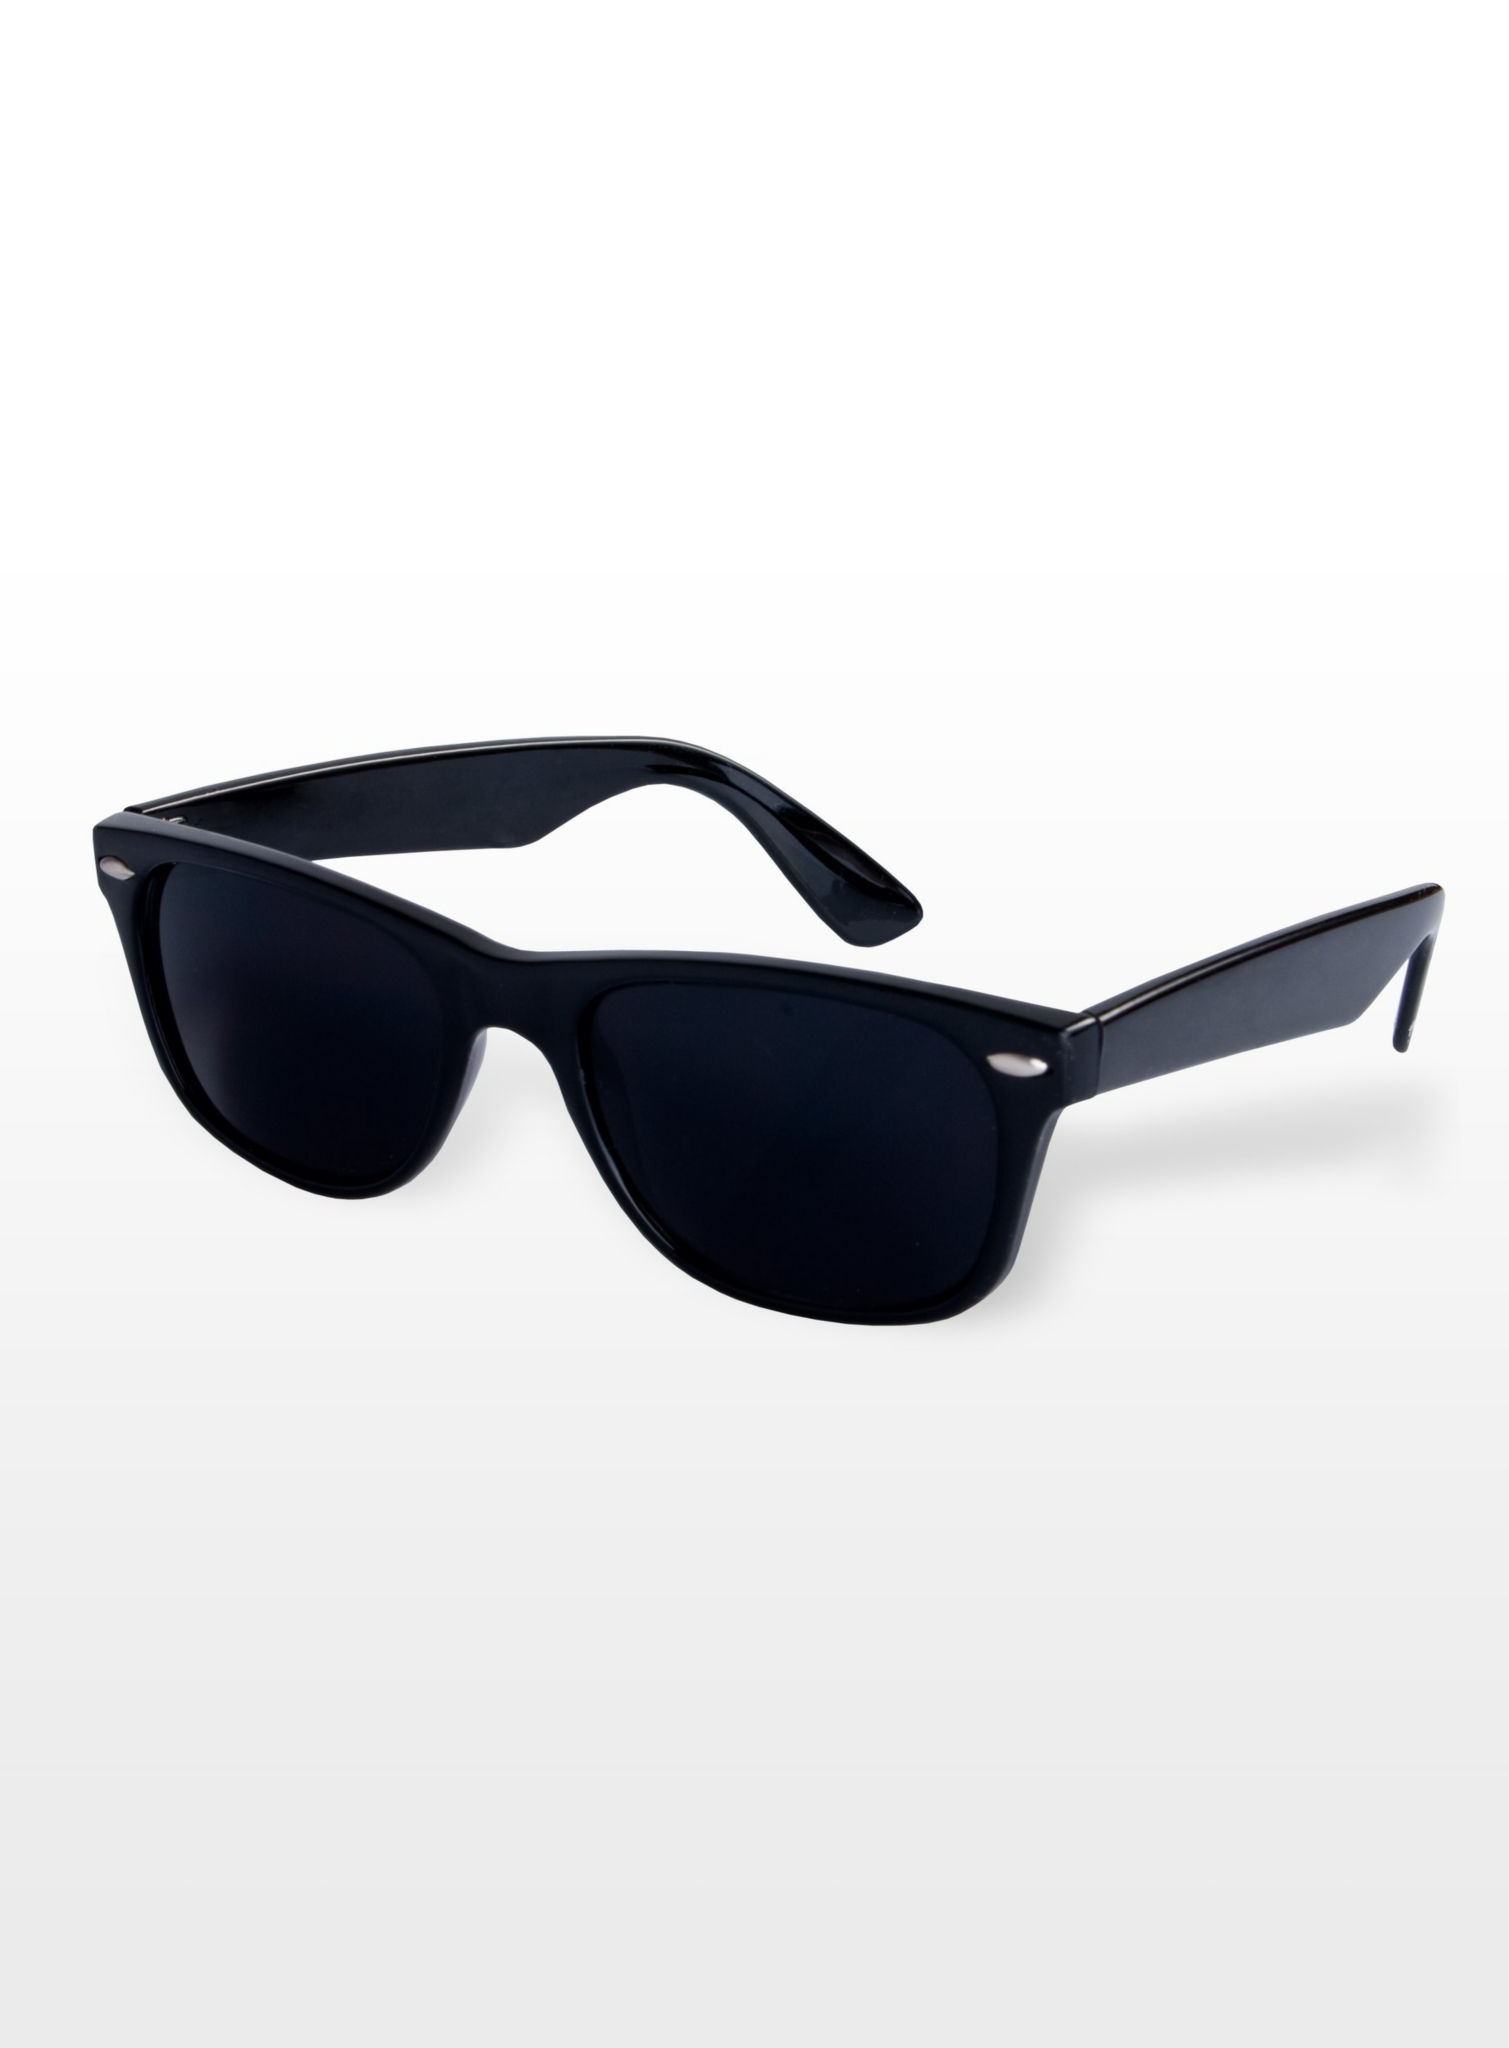 121033-wayfarer-sonnenbrille-sunglasses